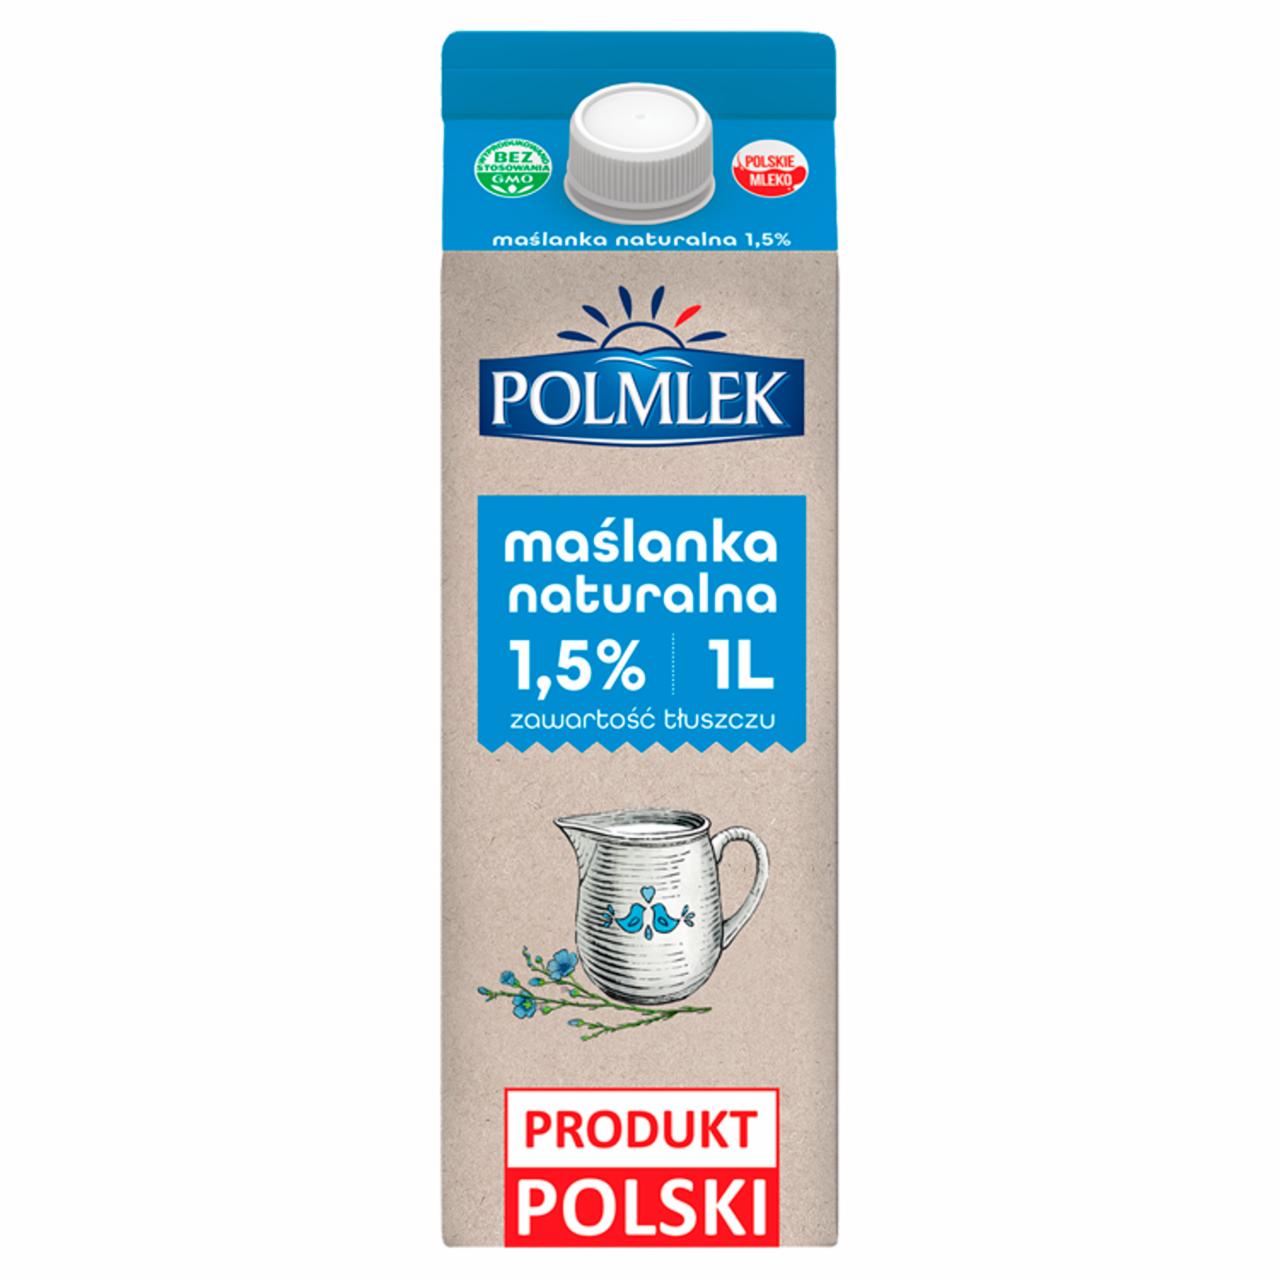 Zdjęcia - Polmlek Maślanka naturalna 1,5% 1 l